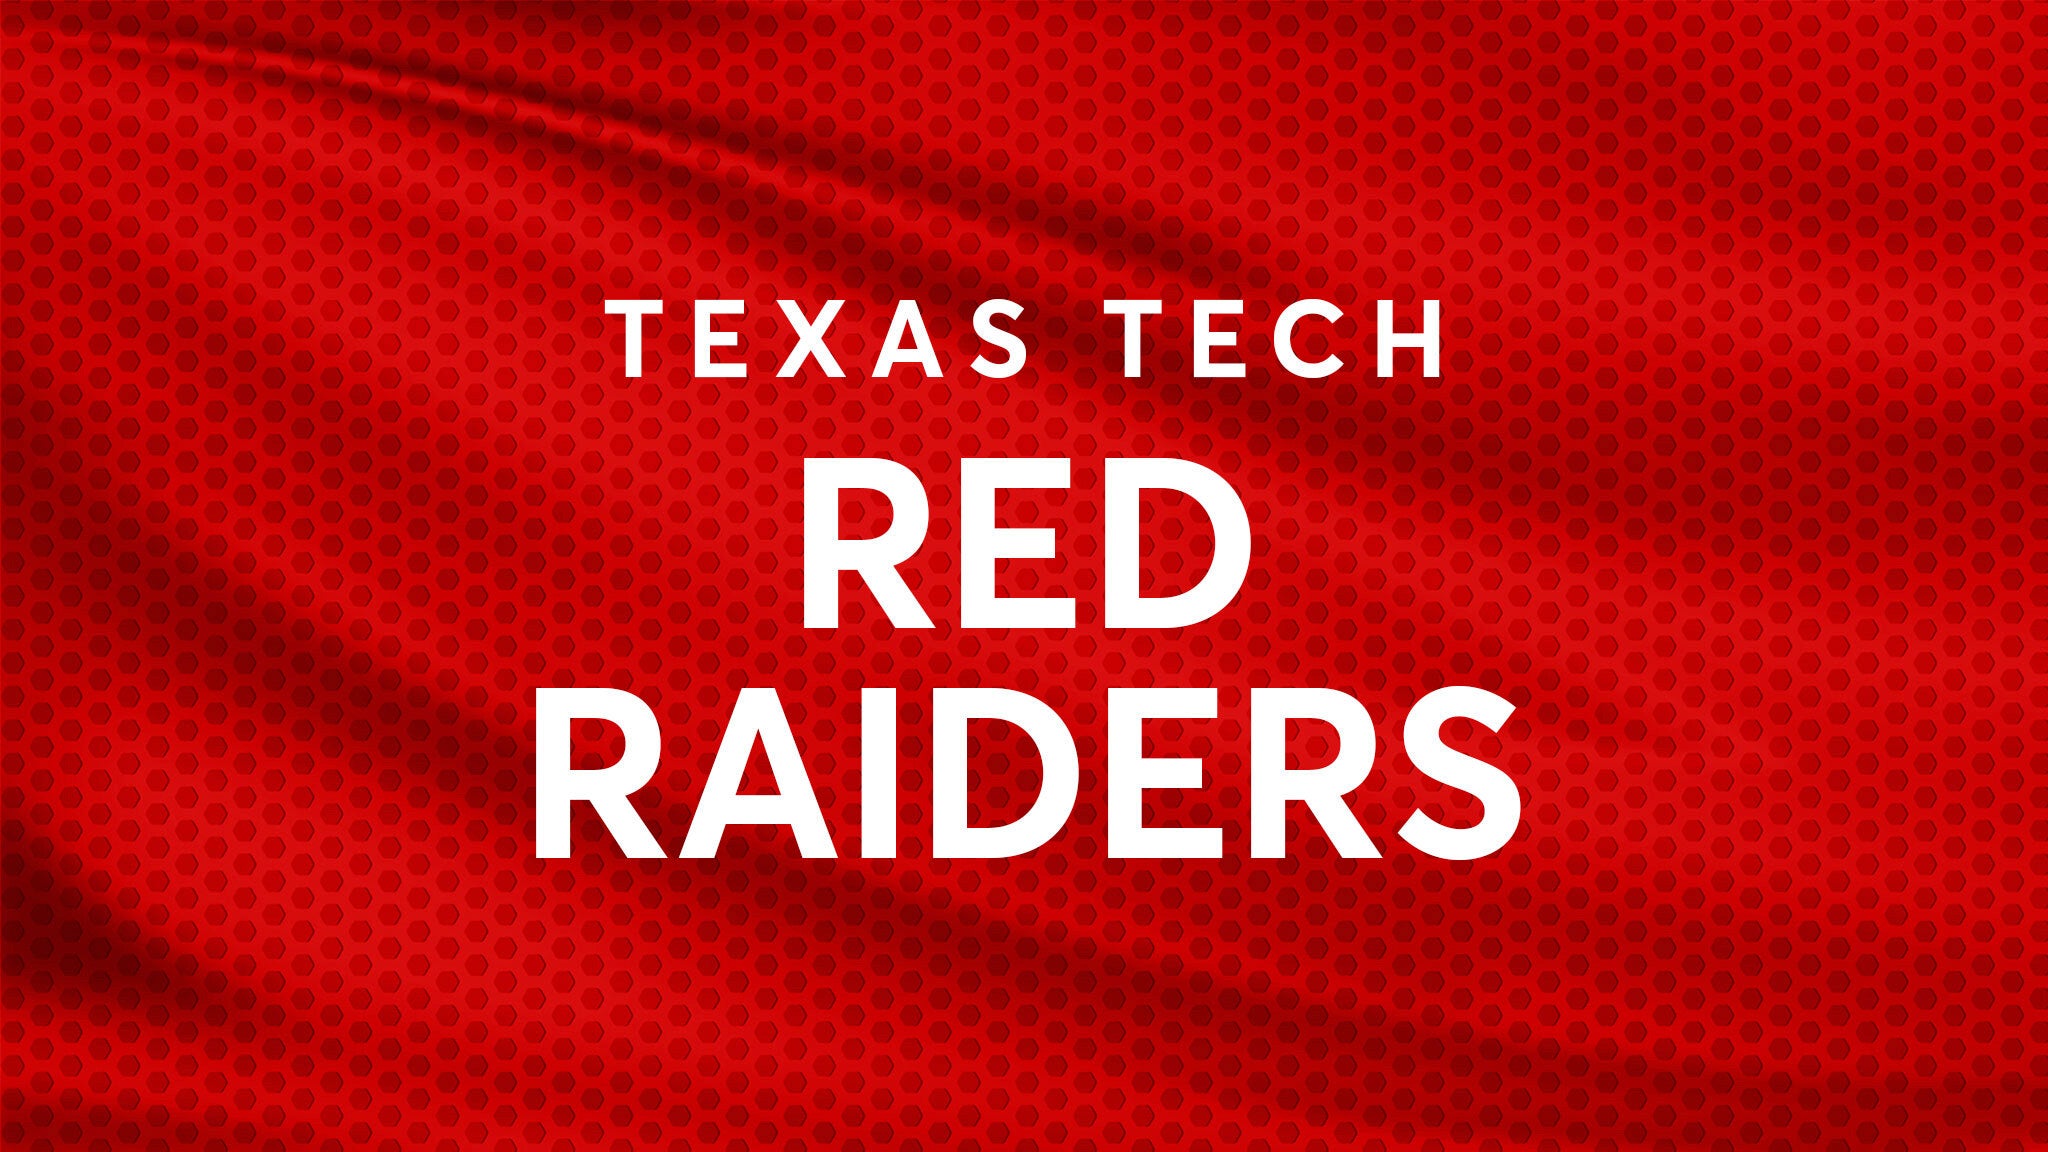 Texas Tech Red Raiders Football vs. Colorado Buffaloes Football hero